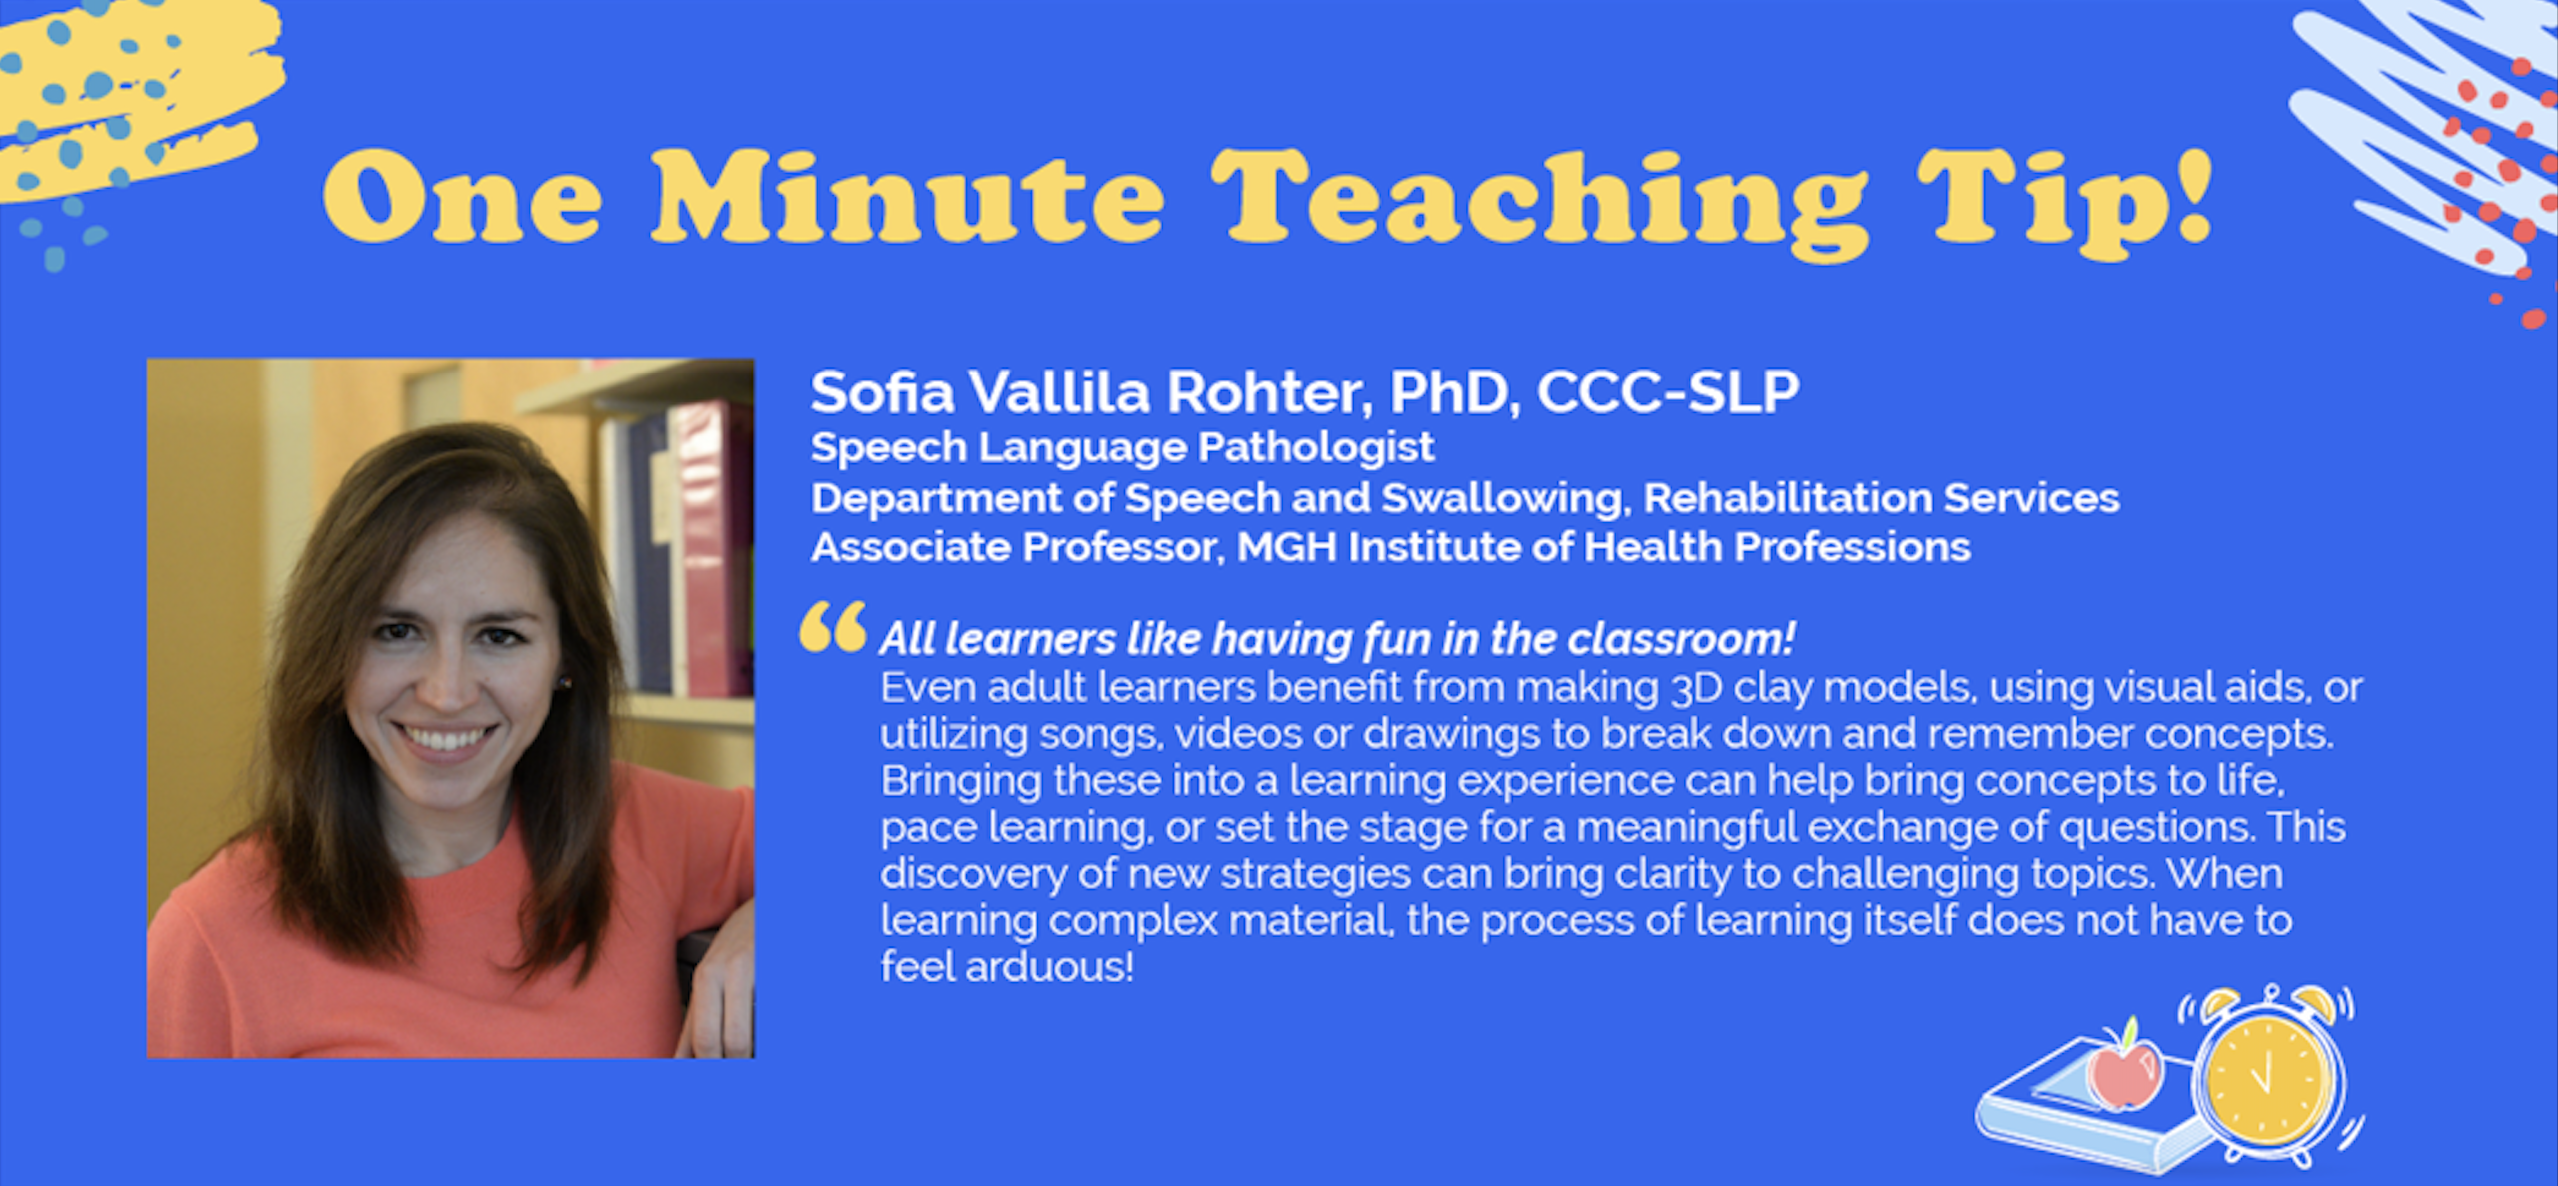 S.Vallila Rohter teach tip visual